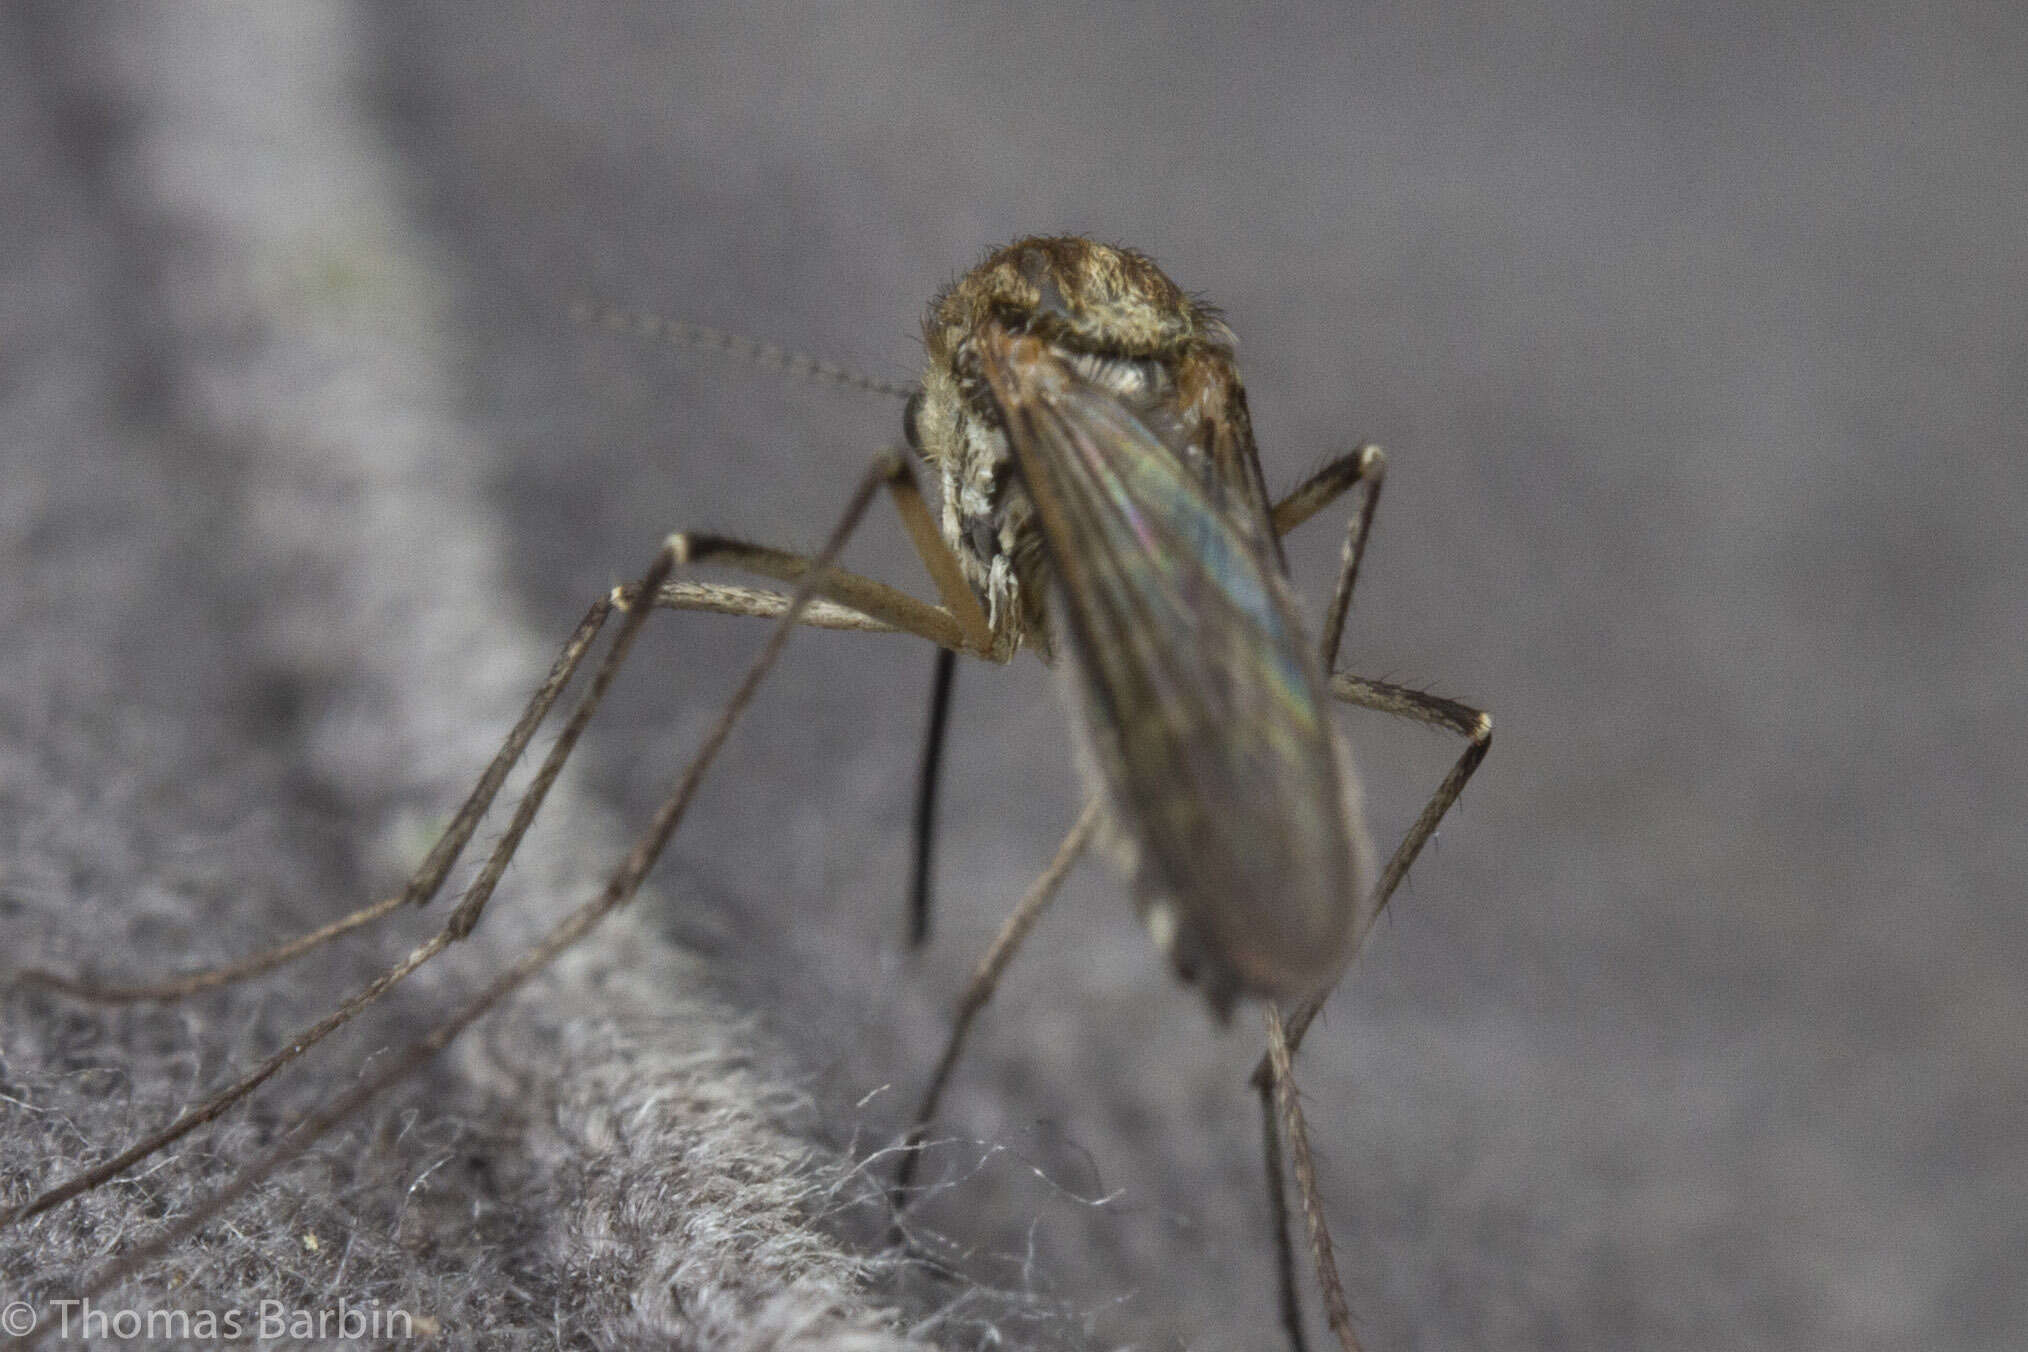 Imagem de Aedes hexodontus Dyar 1916